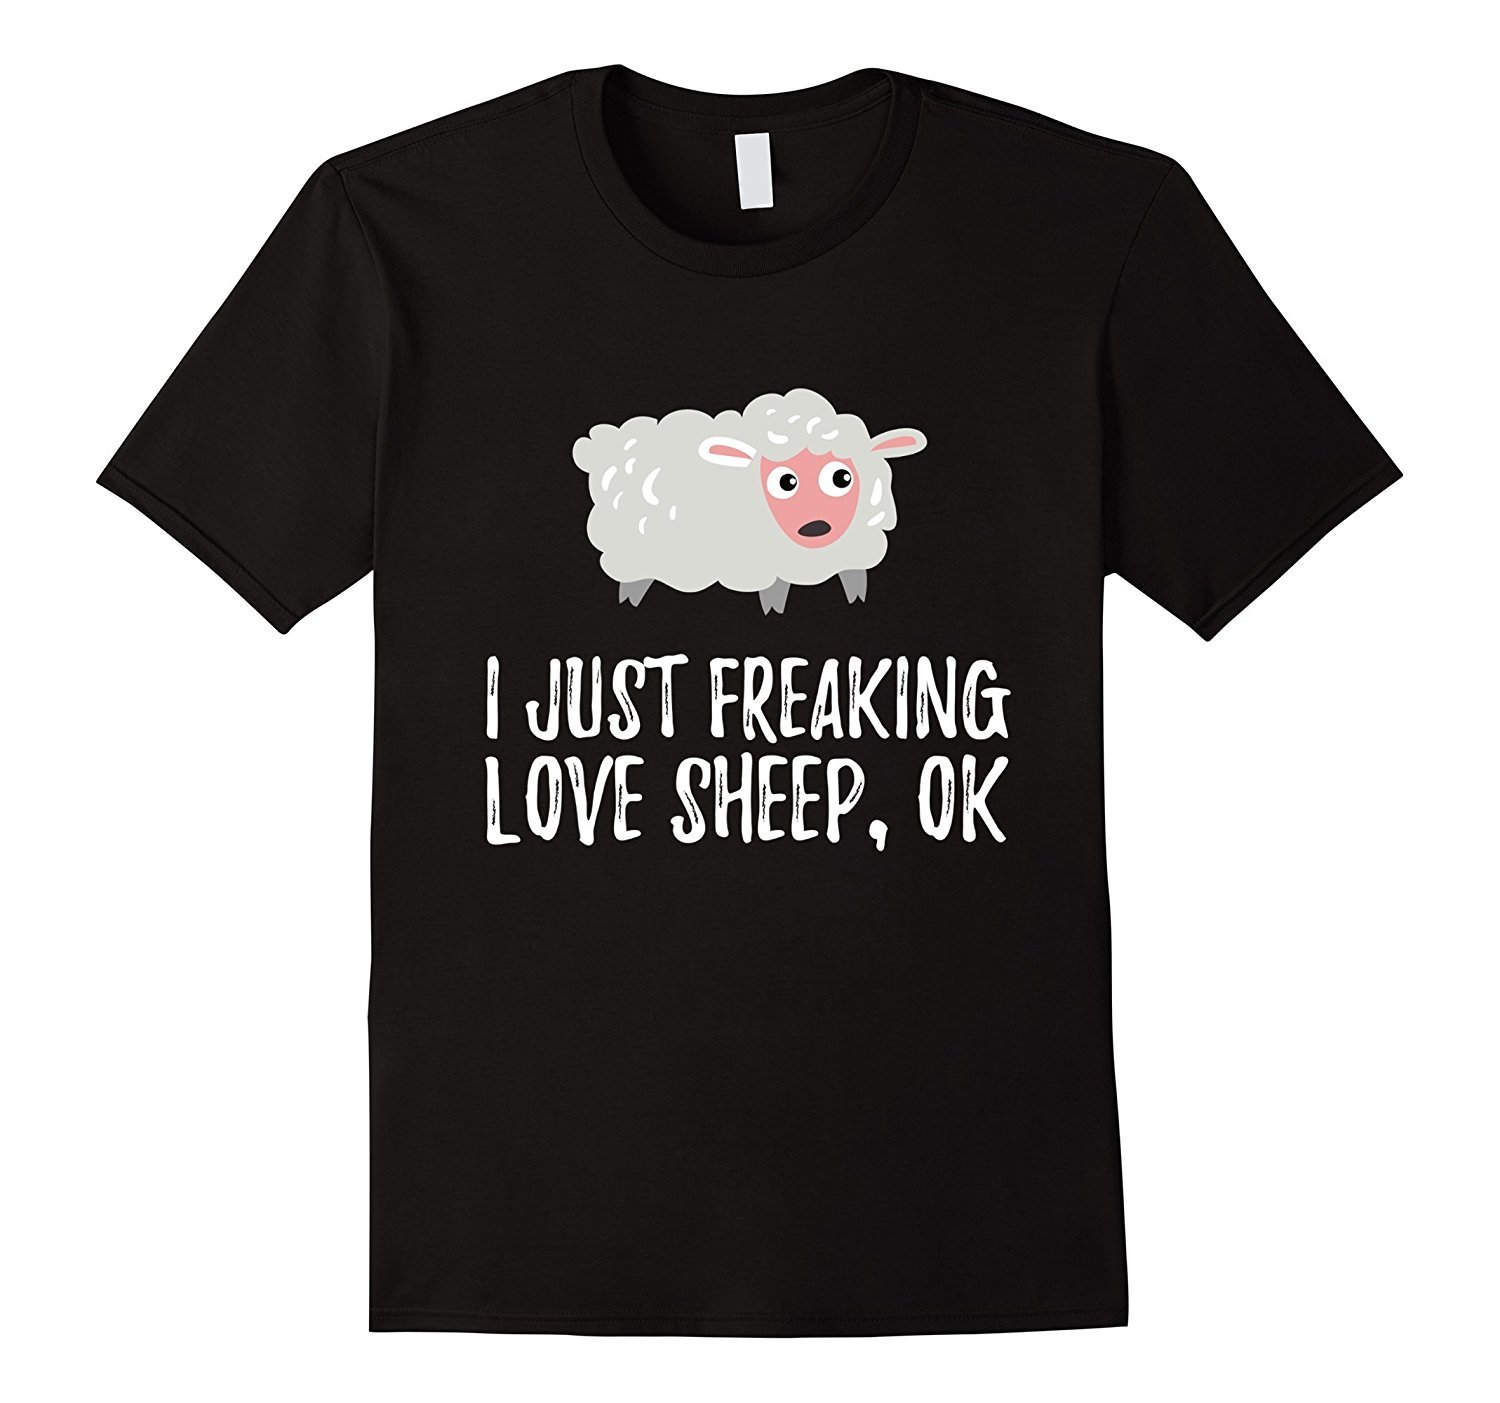 I Just Freaking Love Sheep - Cute Animal Critter T-Shirt